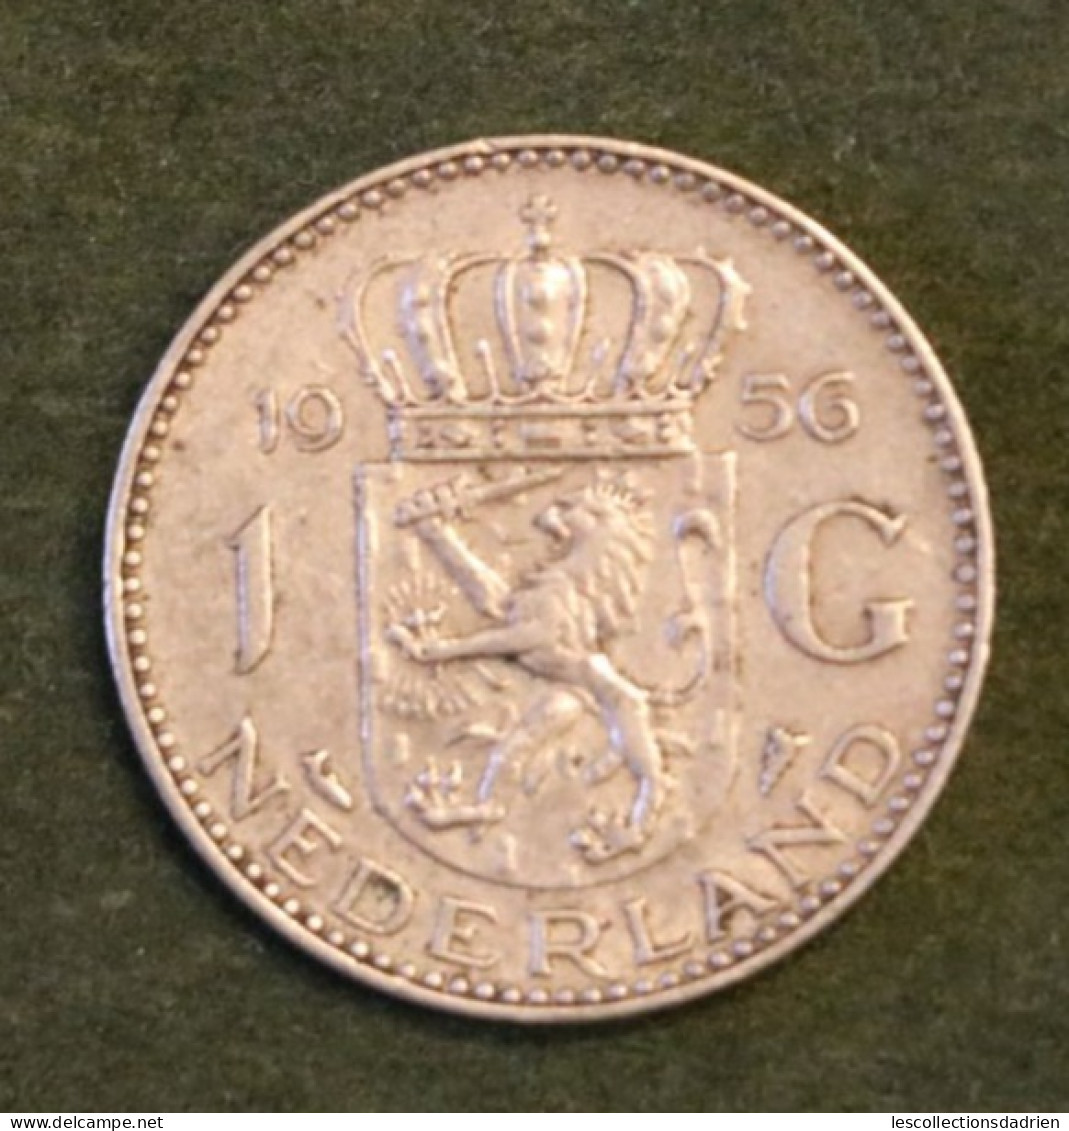 Pièce En Argent Des Pays-Bas 1 Gulden 1956  - Dutch Silver Coin/2 - 1948-1980 : Juliana